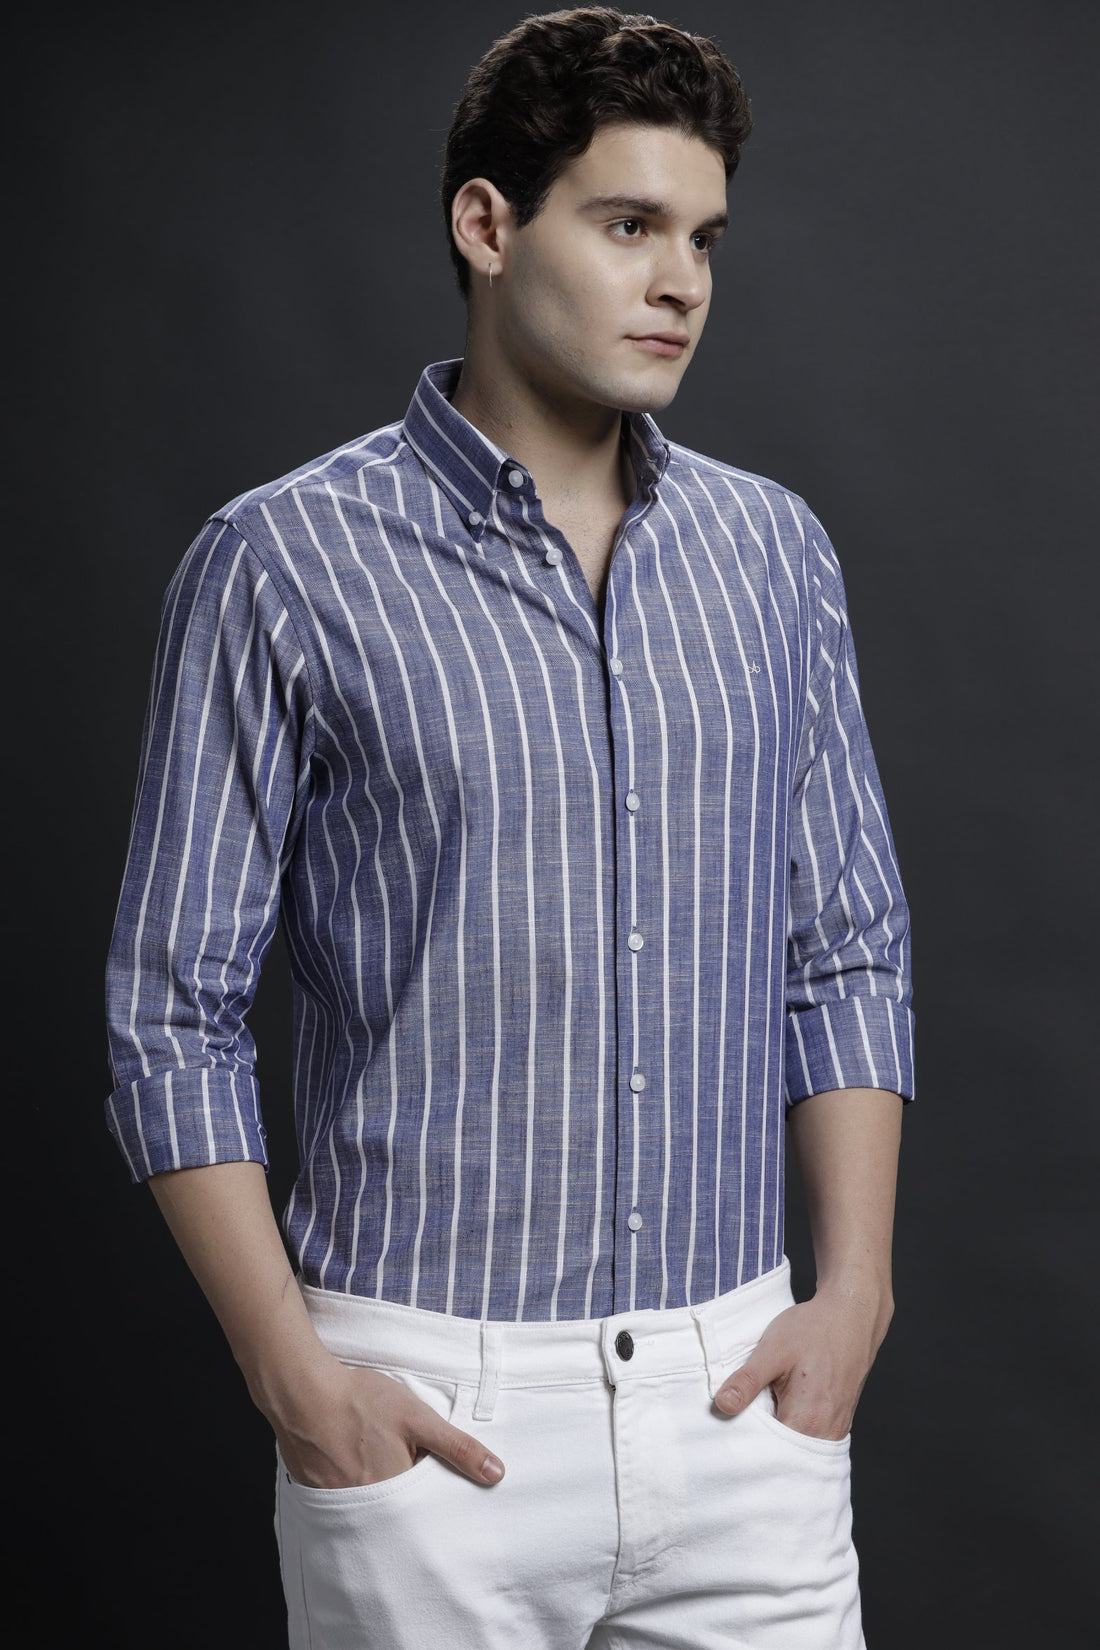 Vertical Striped Blue/White Casual Cotton Shirt